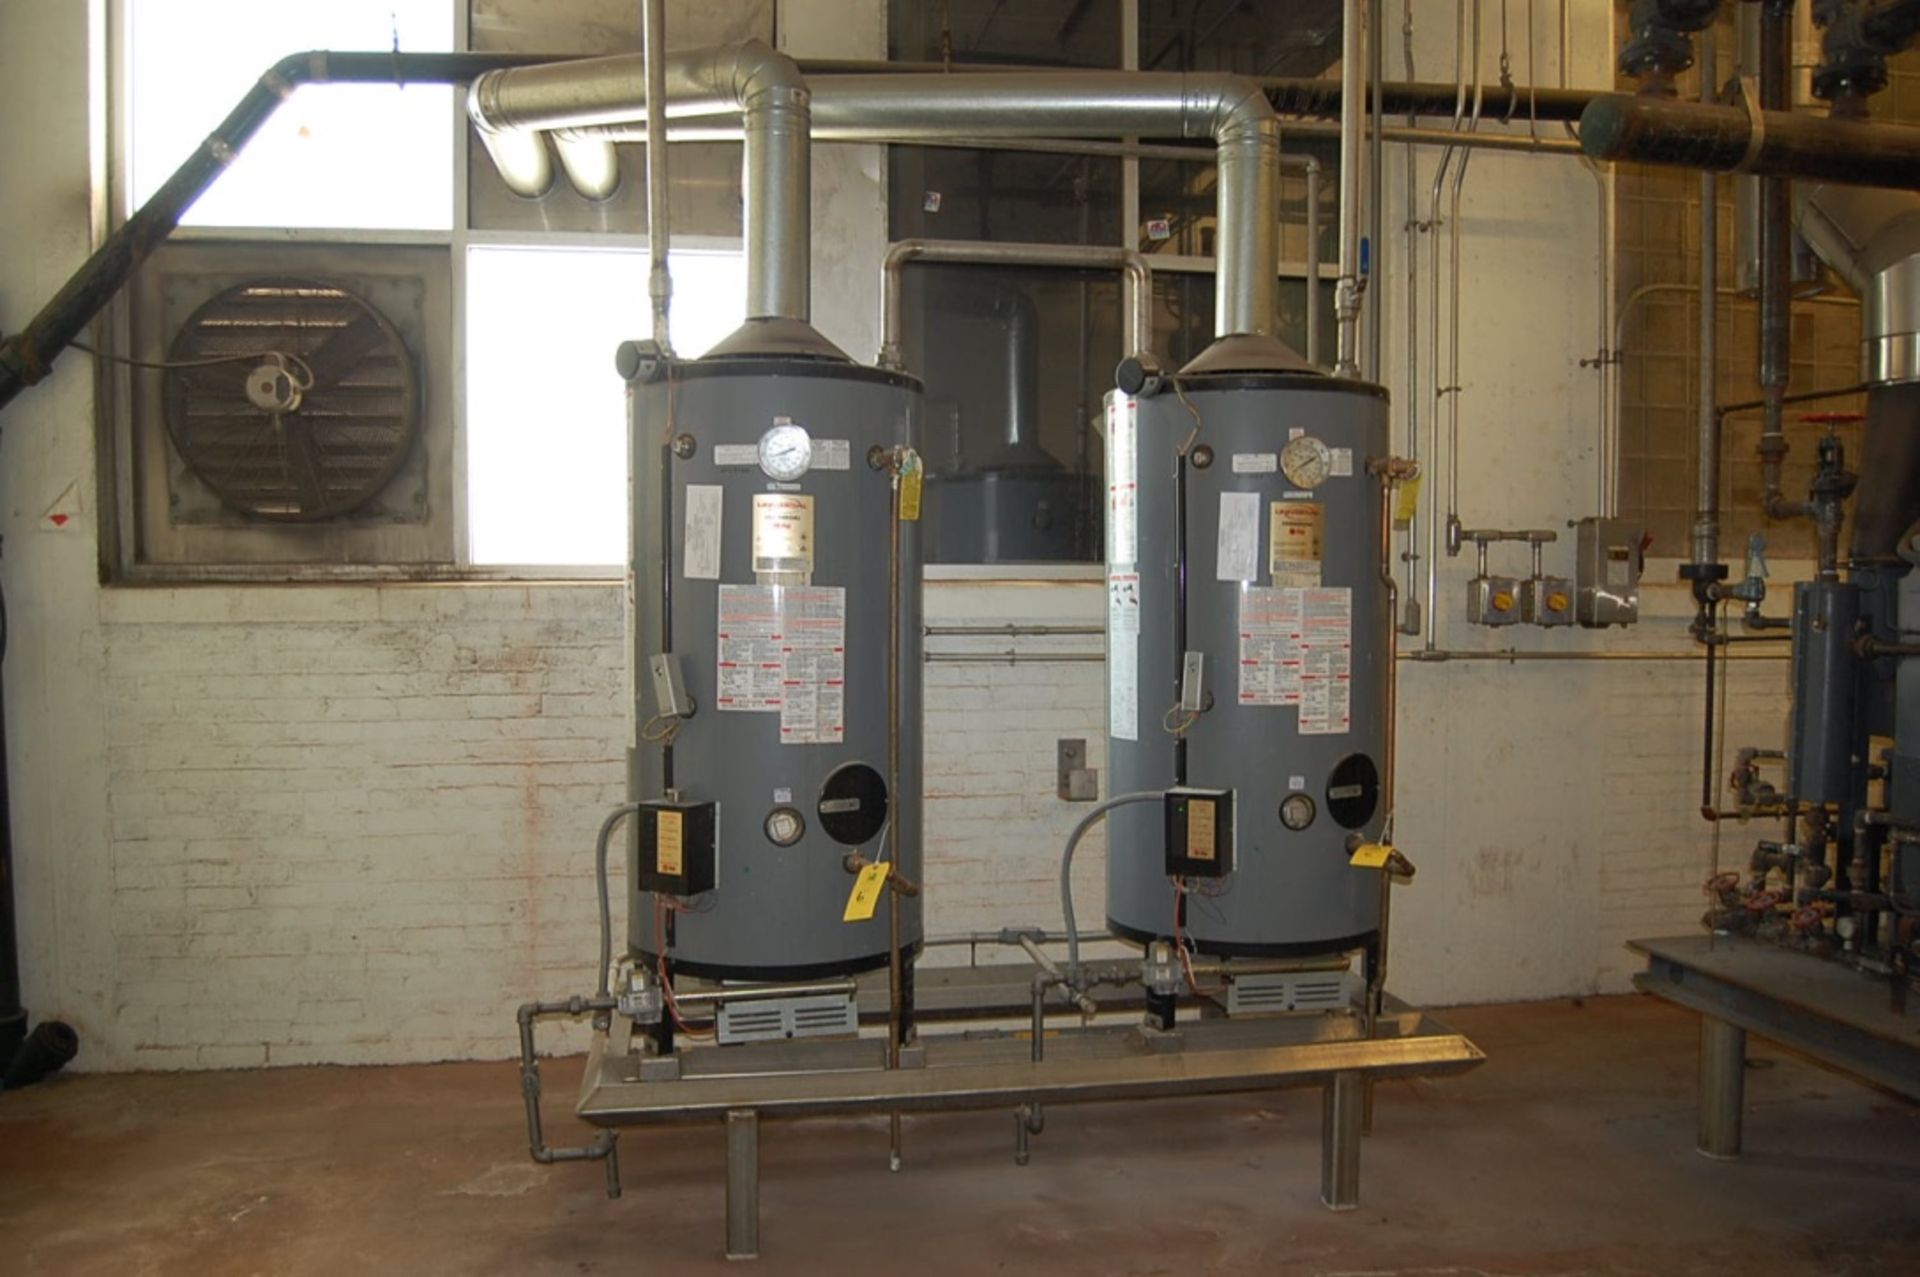 (2) Rheem Rudd Universal Commercial Gas Hot Water Heaters Model #G-100-200 LOADING FEE: $900